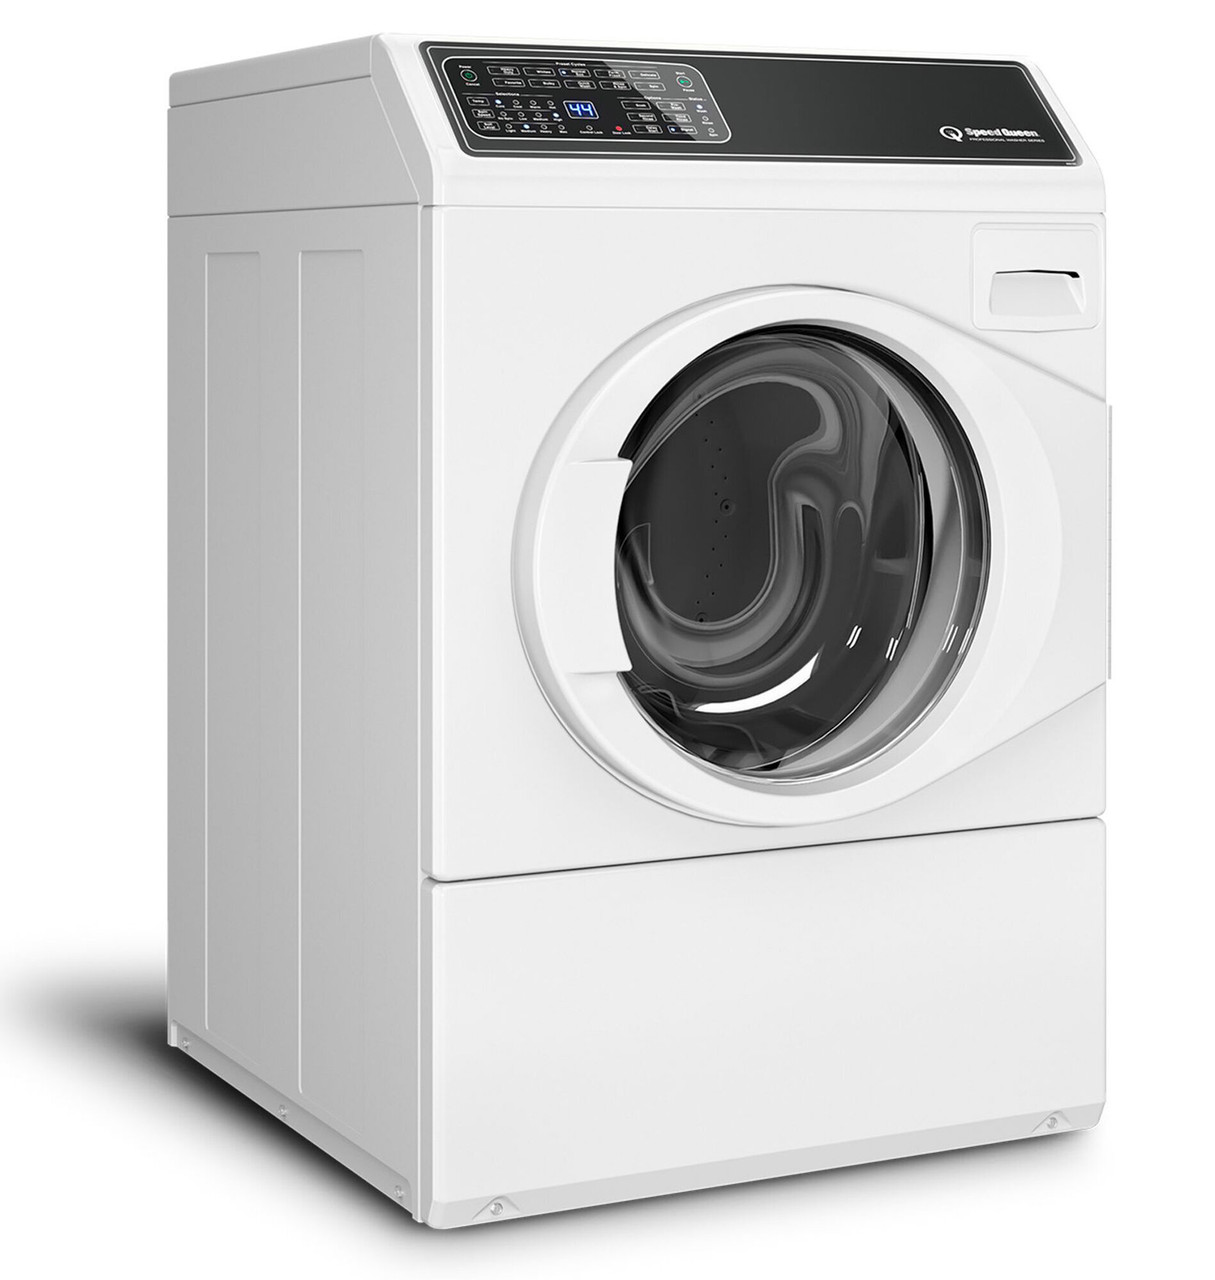 AFNE9BBLACK – 10kg Front Load Washing Machine – White